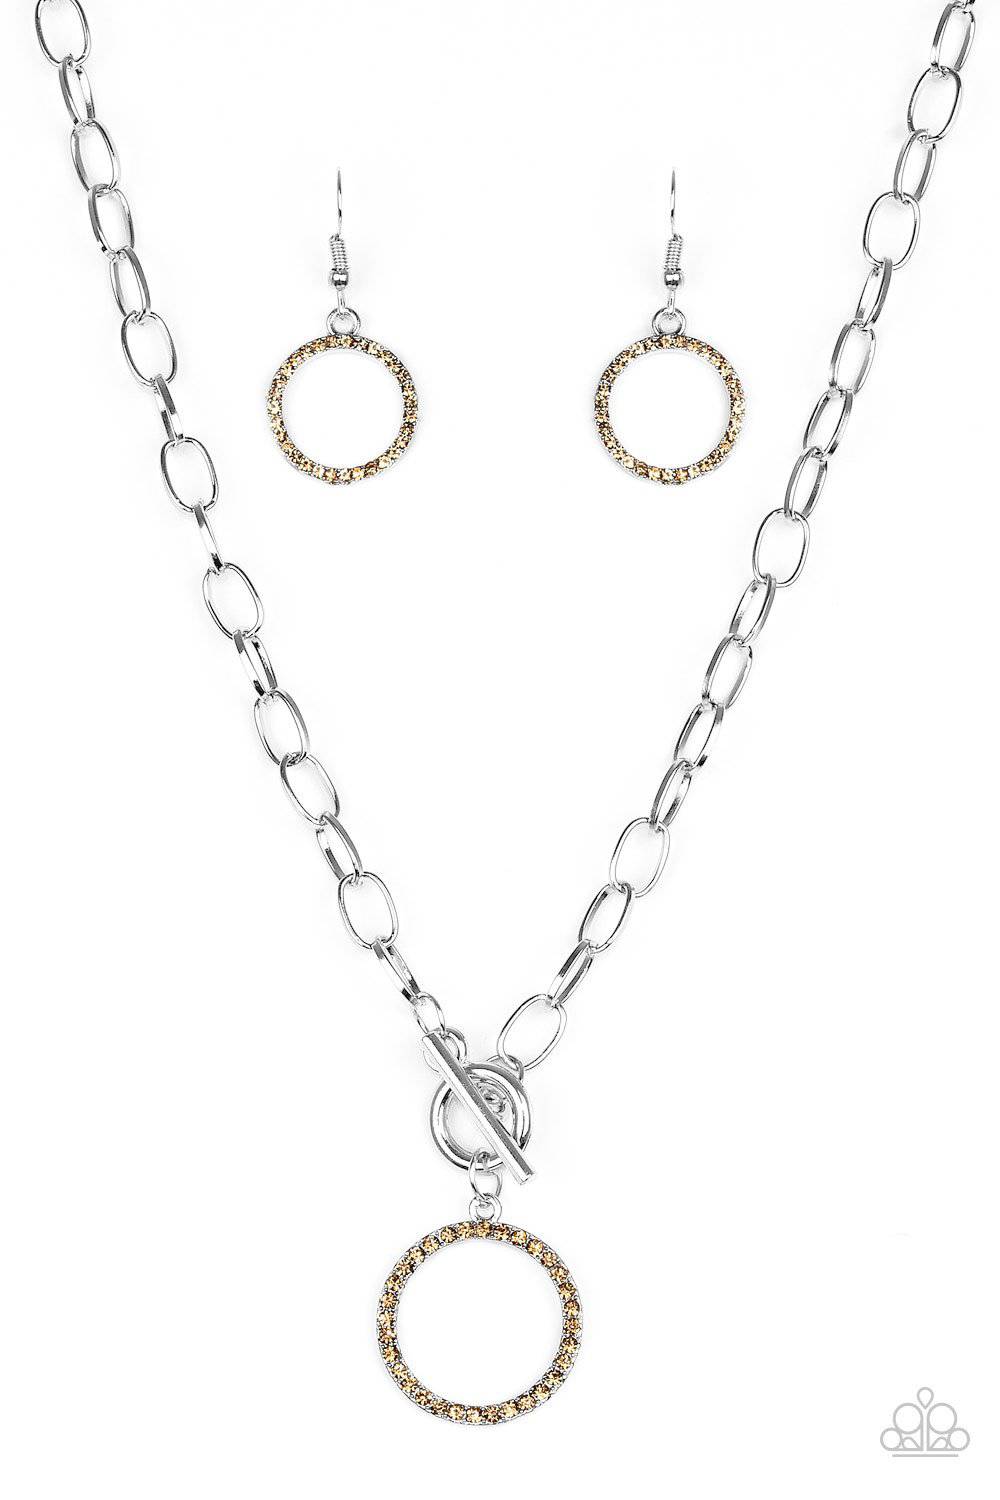 All In Favor - Brown Topaz Rhinestone Necklace - Paparazzi Accessories - GlaMarous Titi Jewels